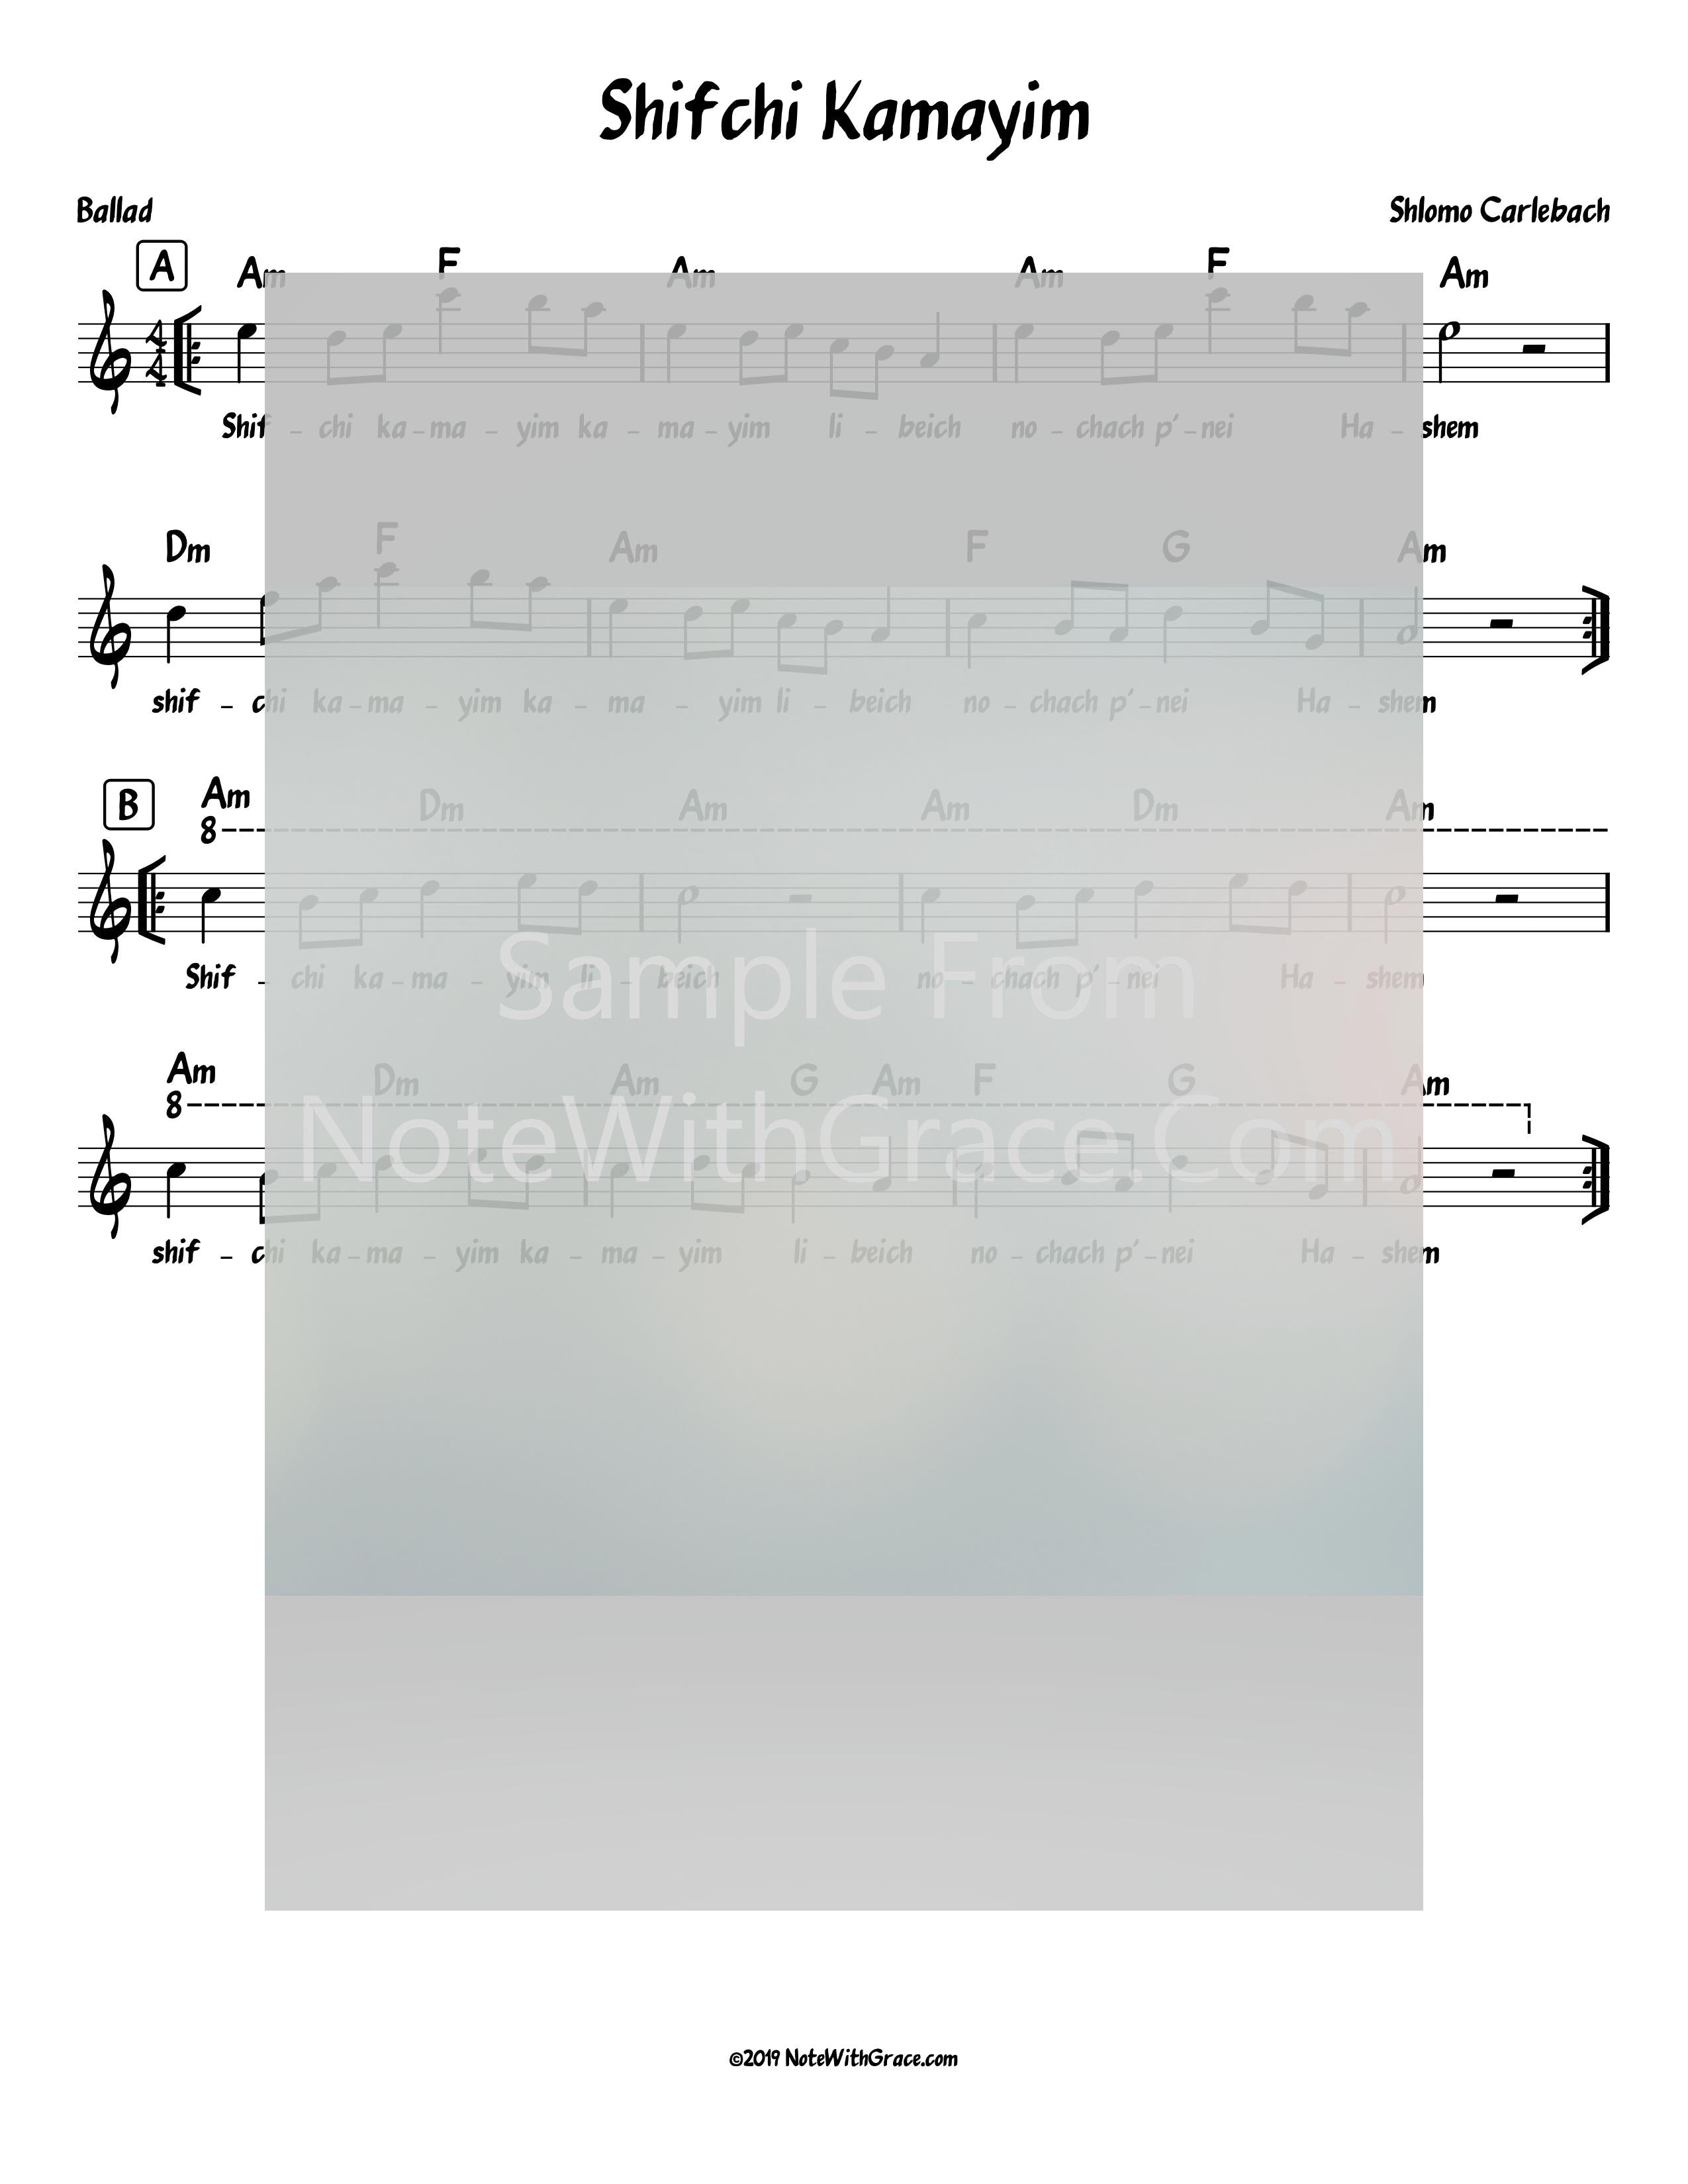 Shifchi Kamayim Lead Sheet (Shlomo Carlbach)-Sheet music-NoteWithGrace.com